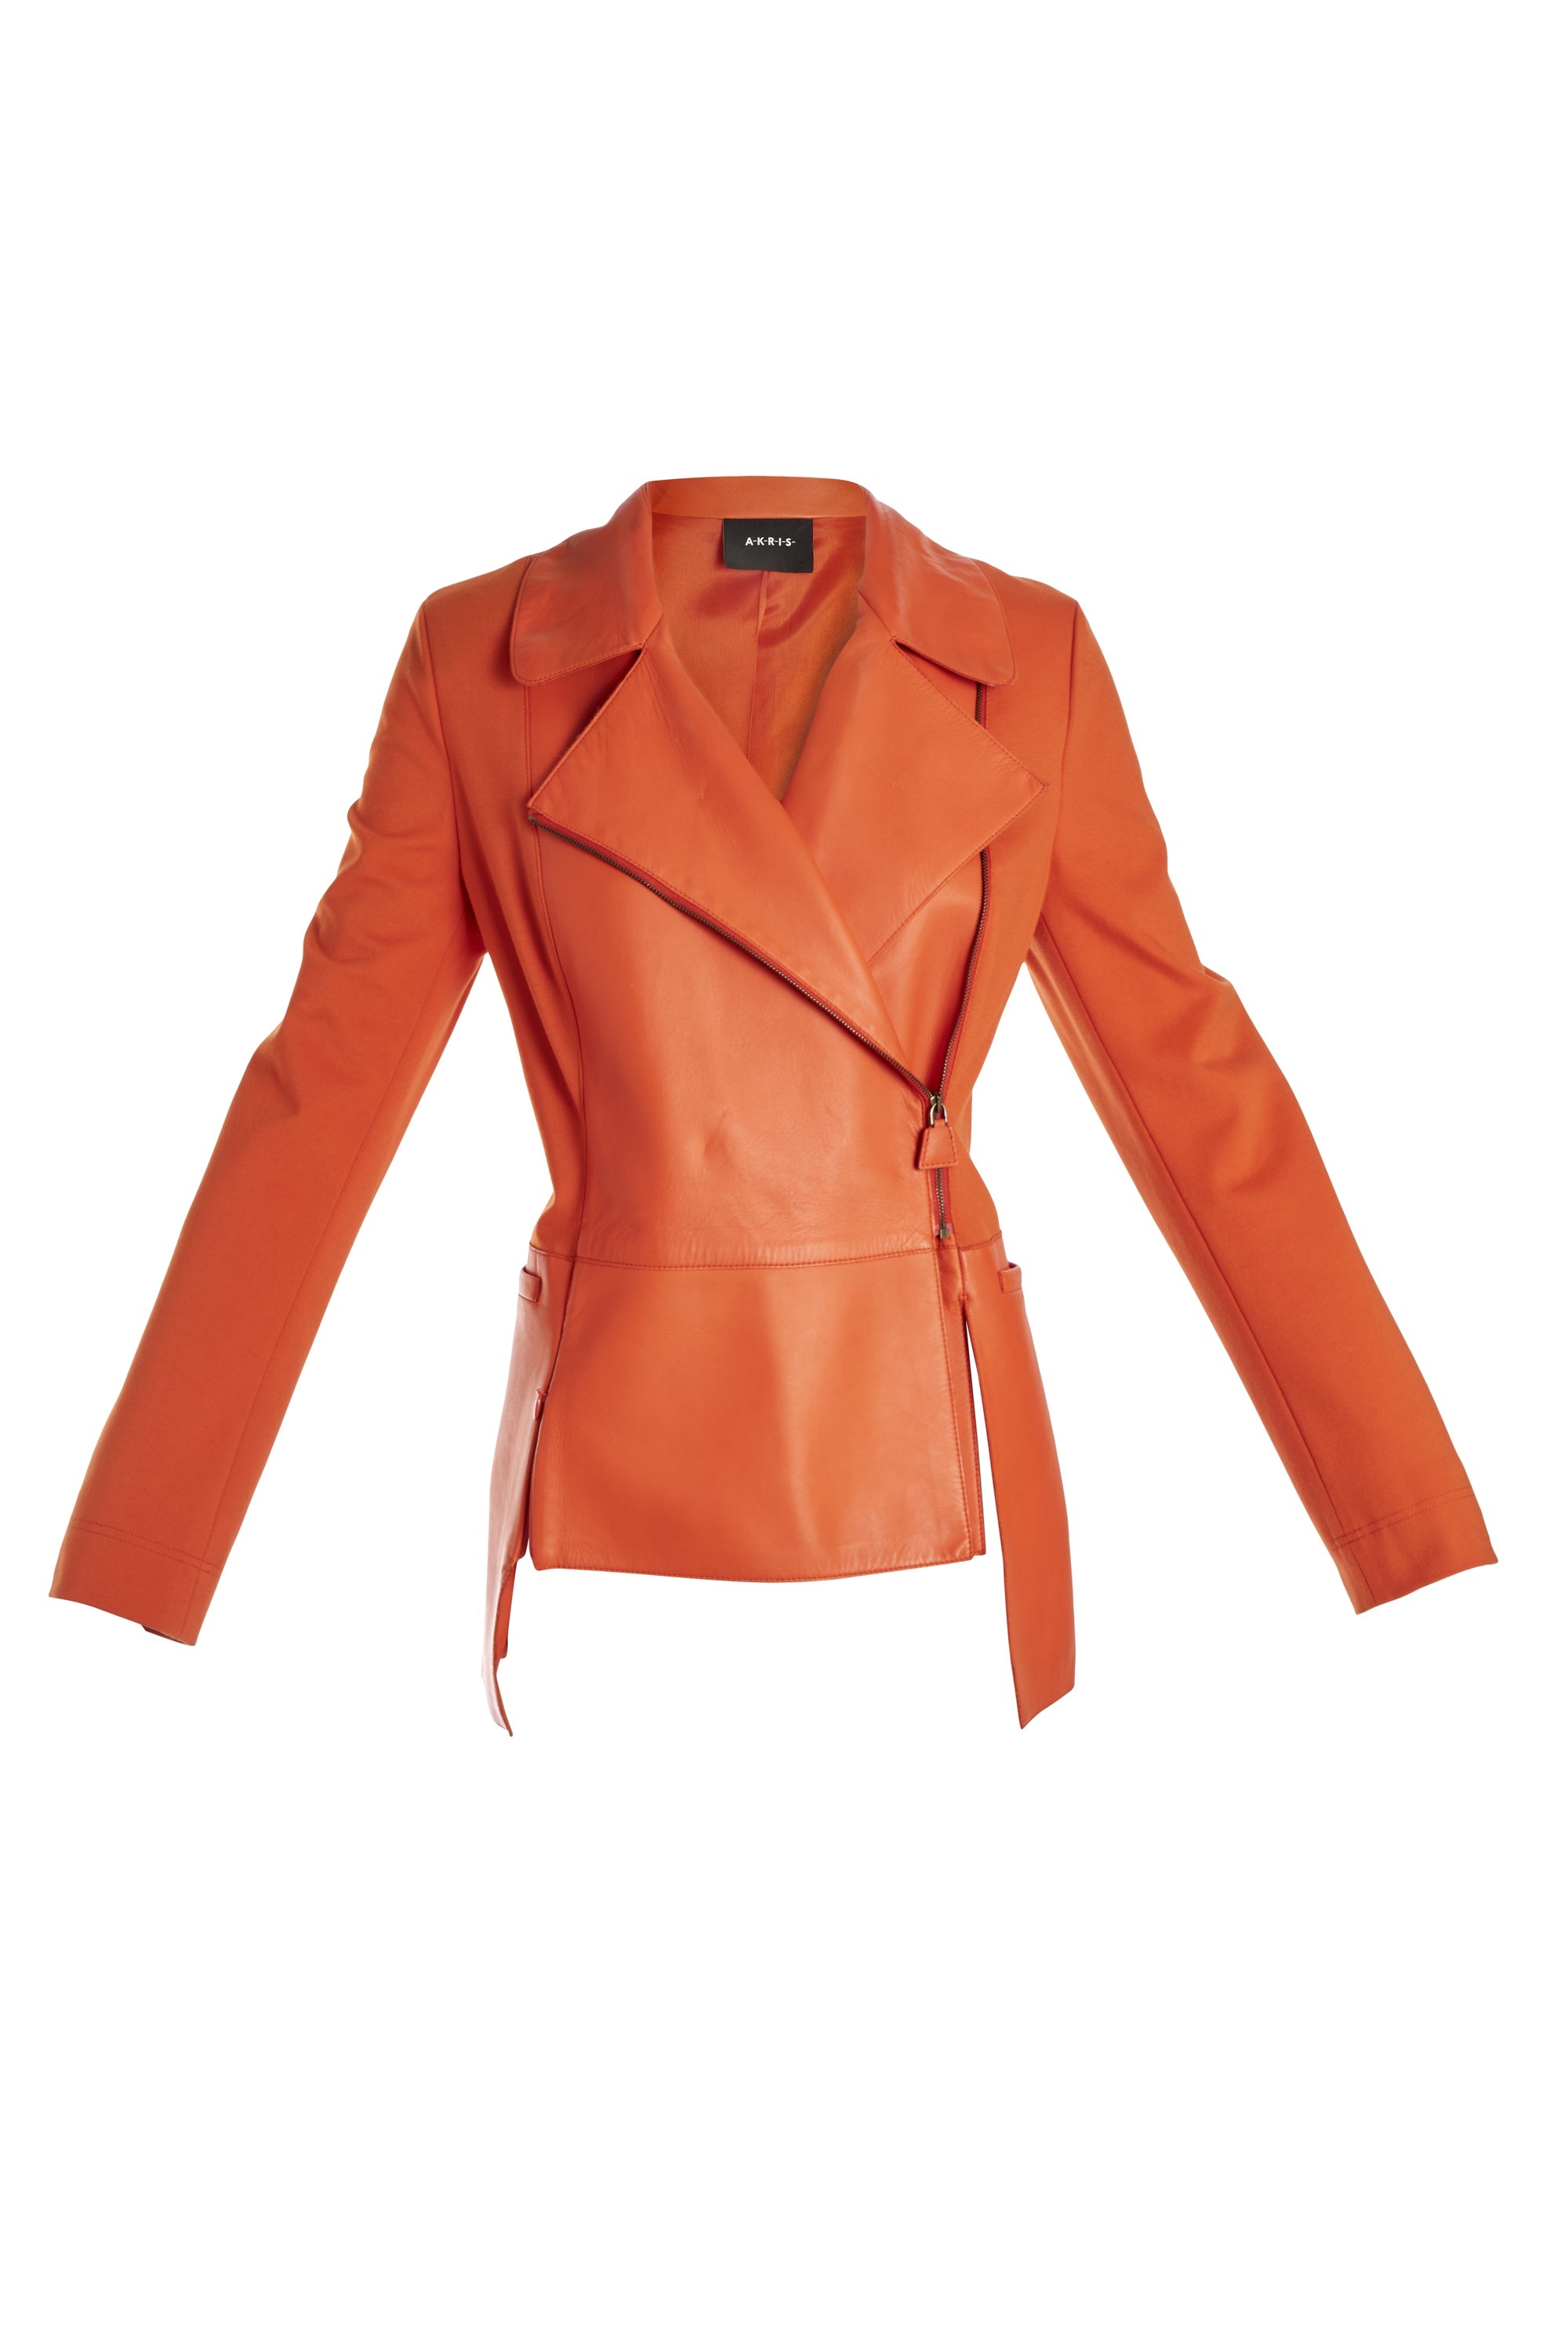 Akris Orange Knit + Leather Jacket - Foxy Couture Carmel